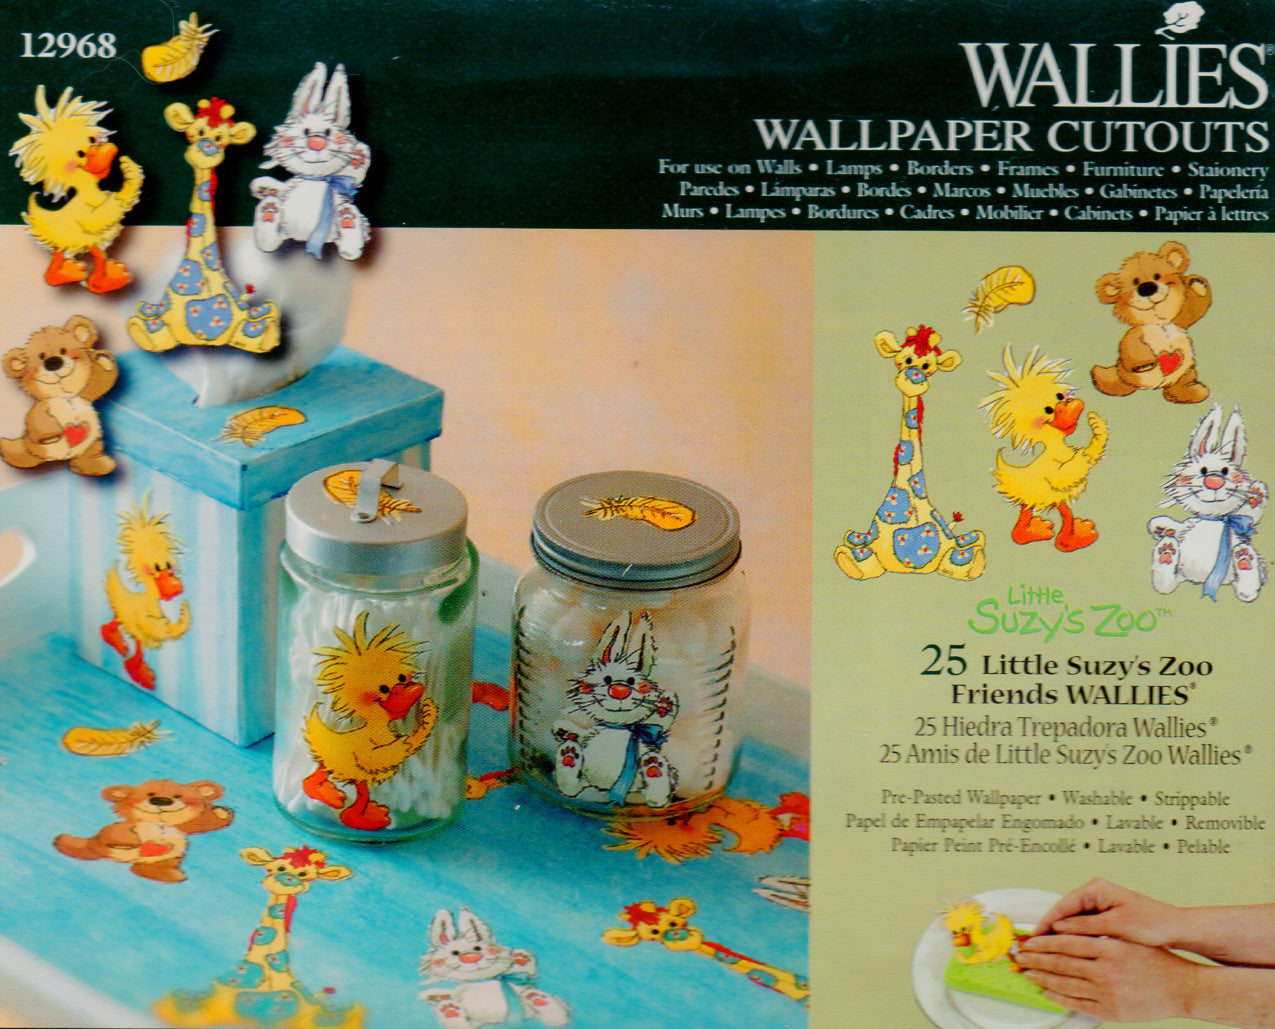 Wallies Little Suzys Zoo Friends Wallpaper Cutouts